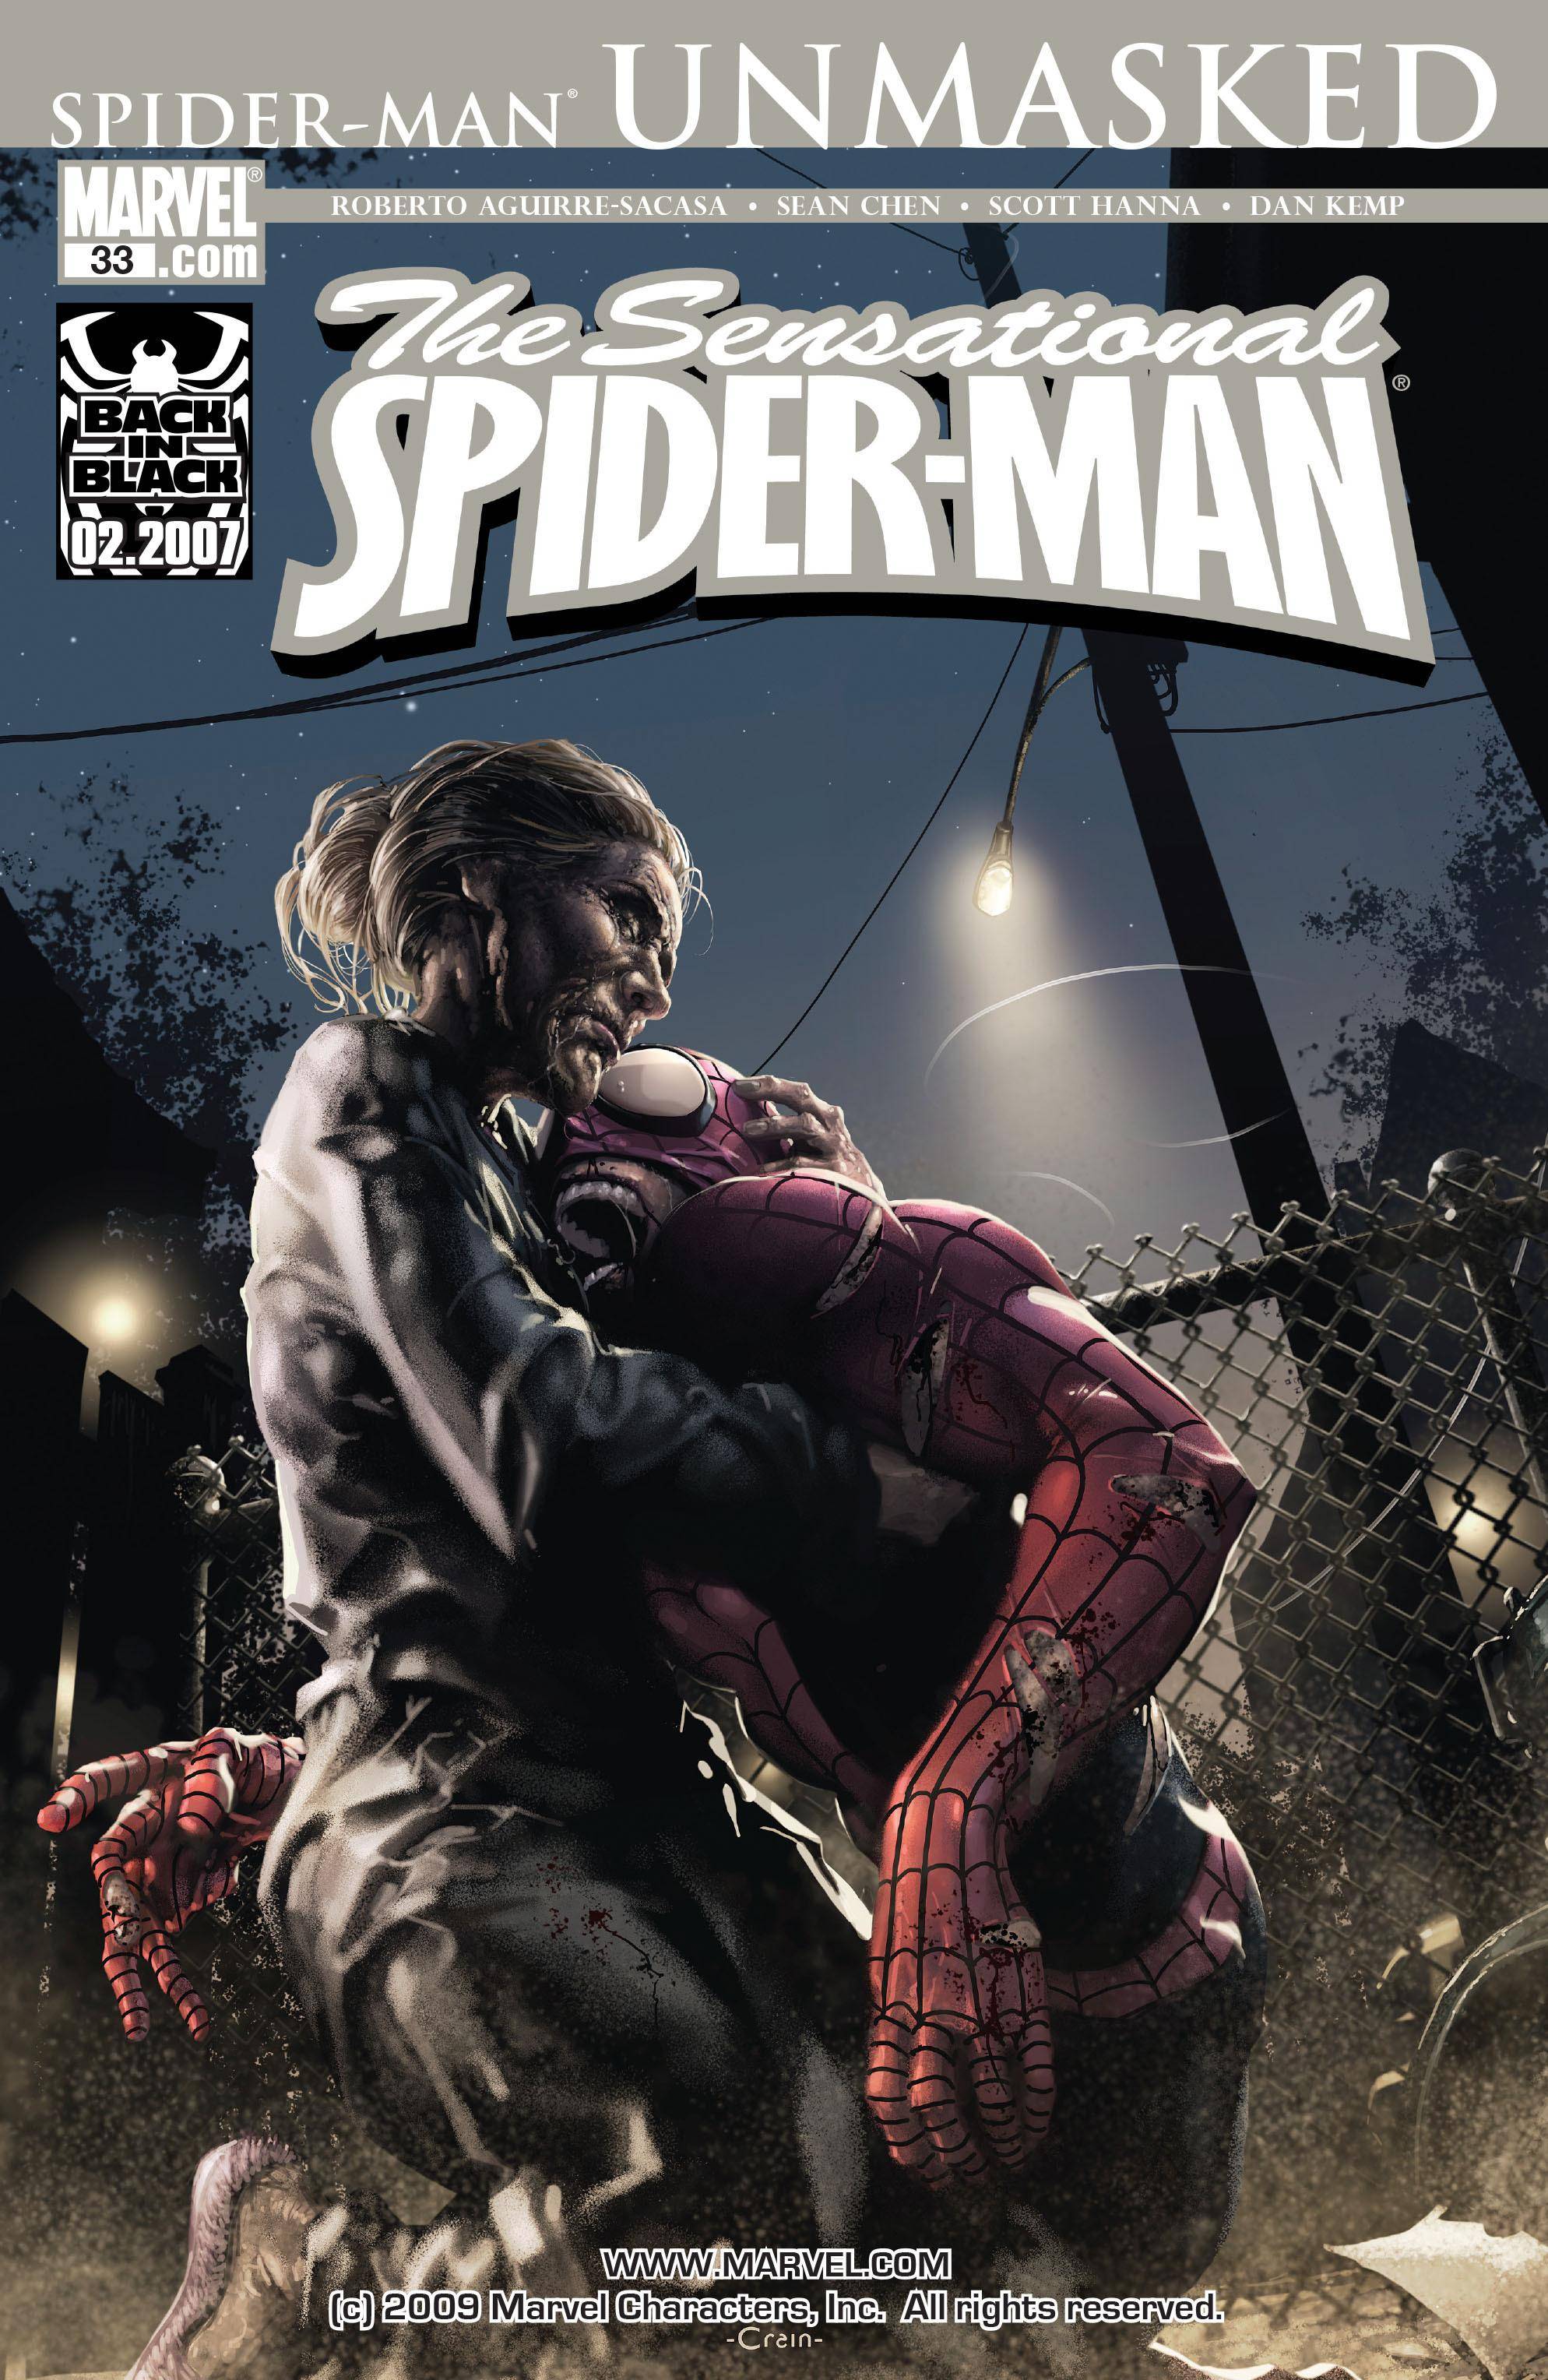 The Sensational Spider-Man 033 2007 digital